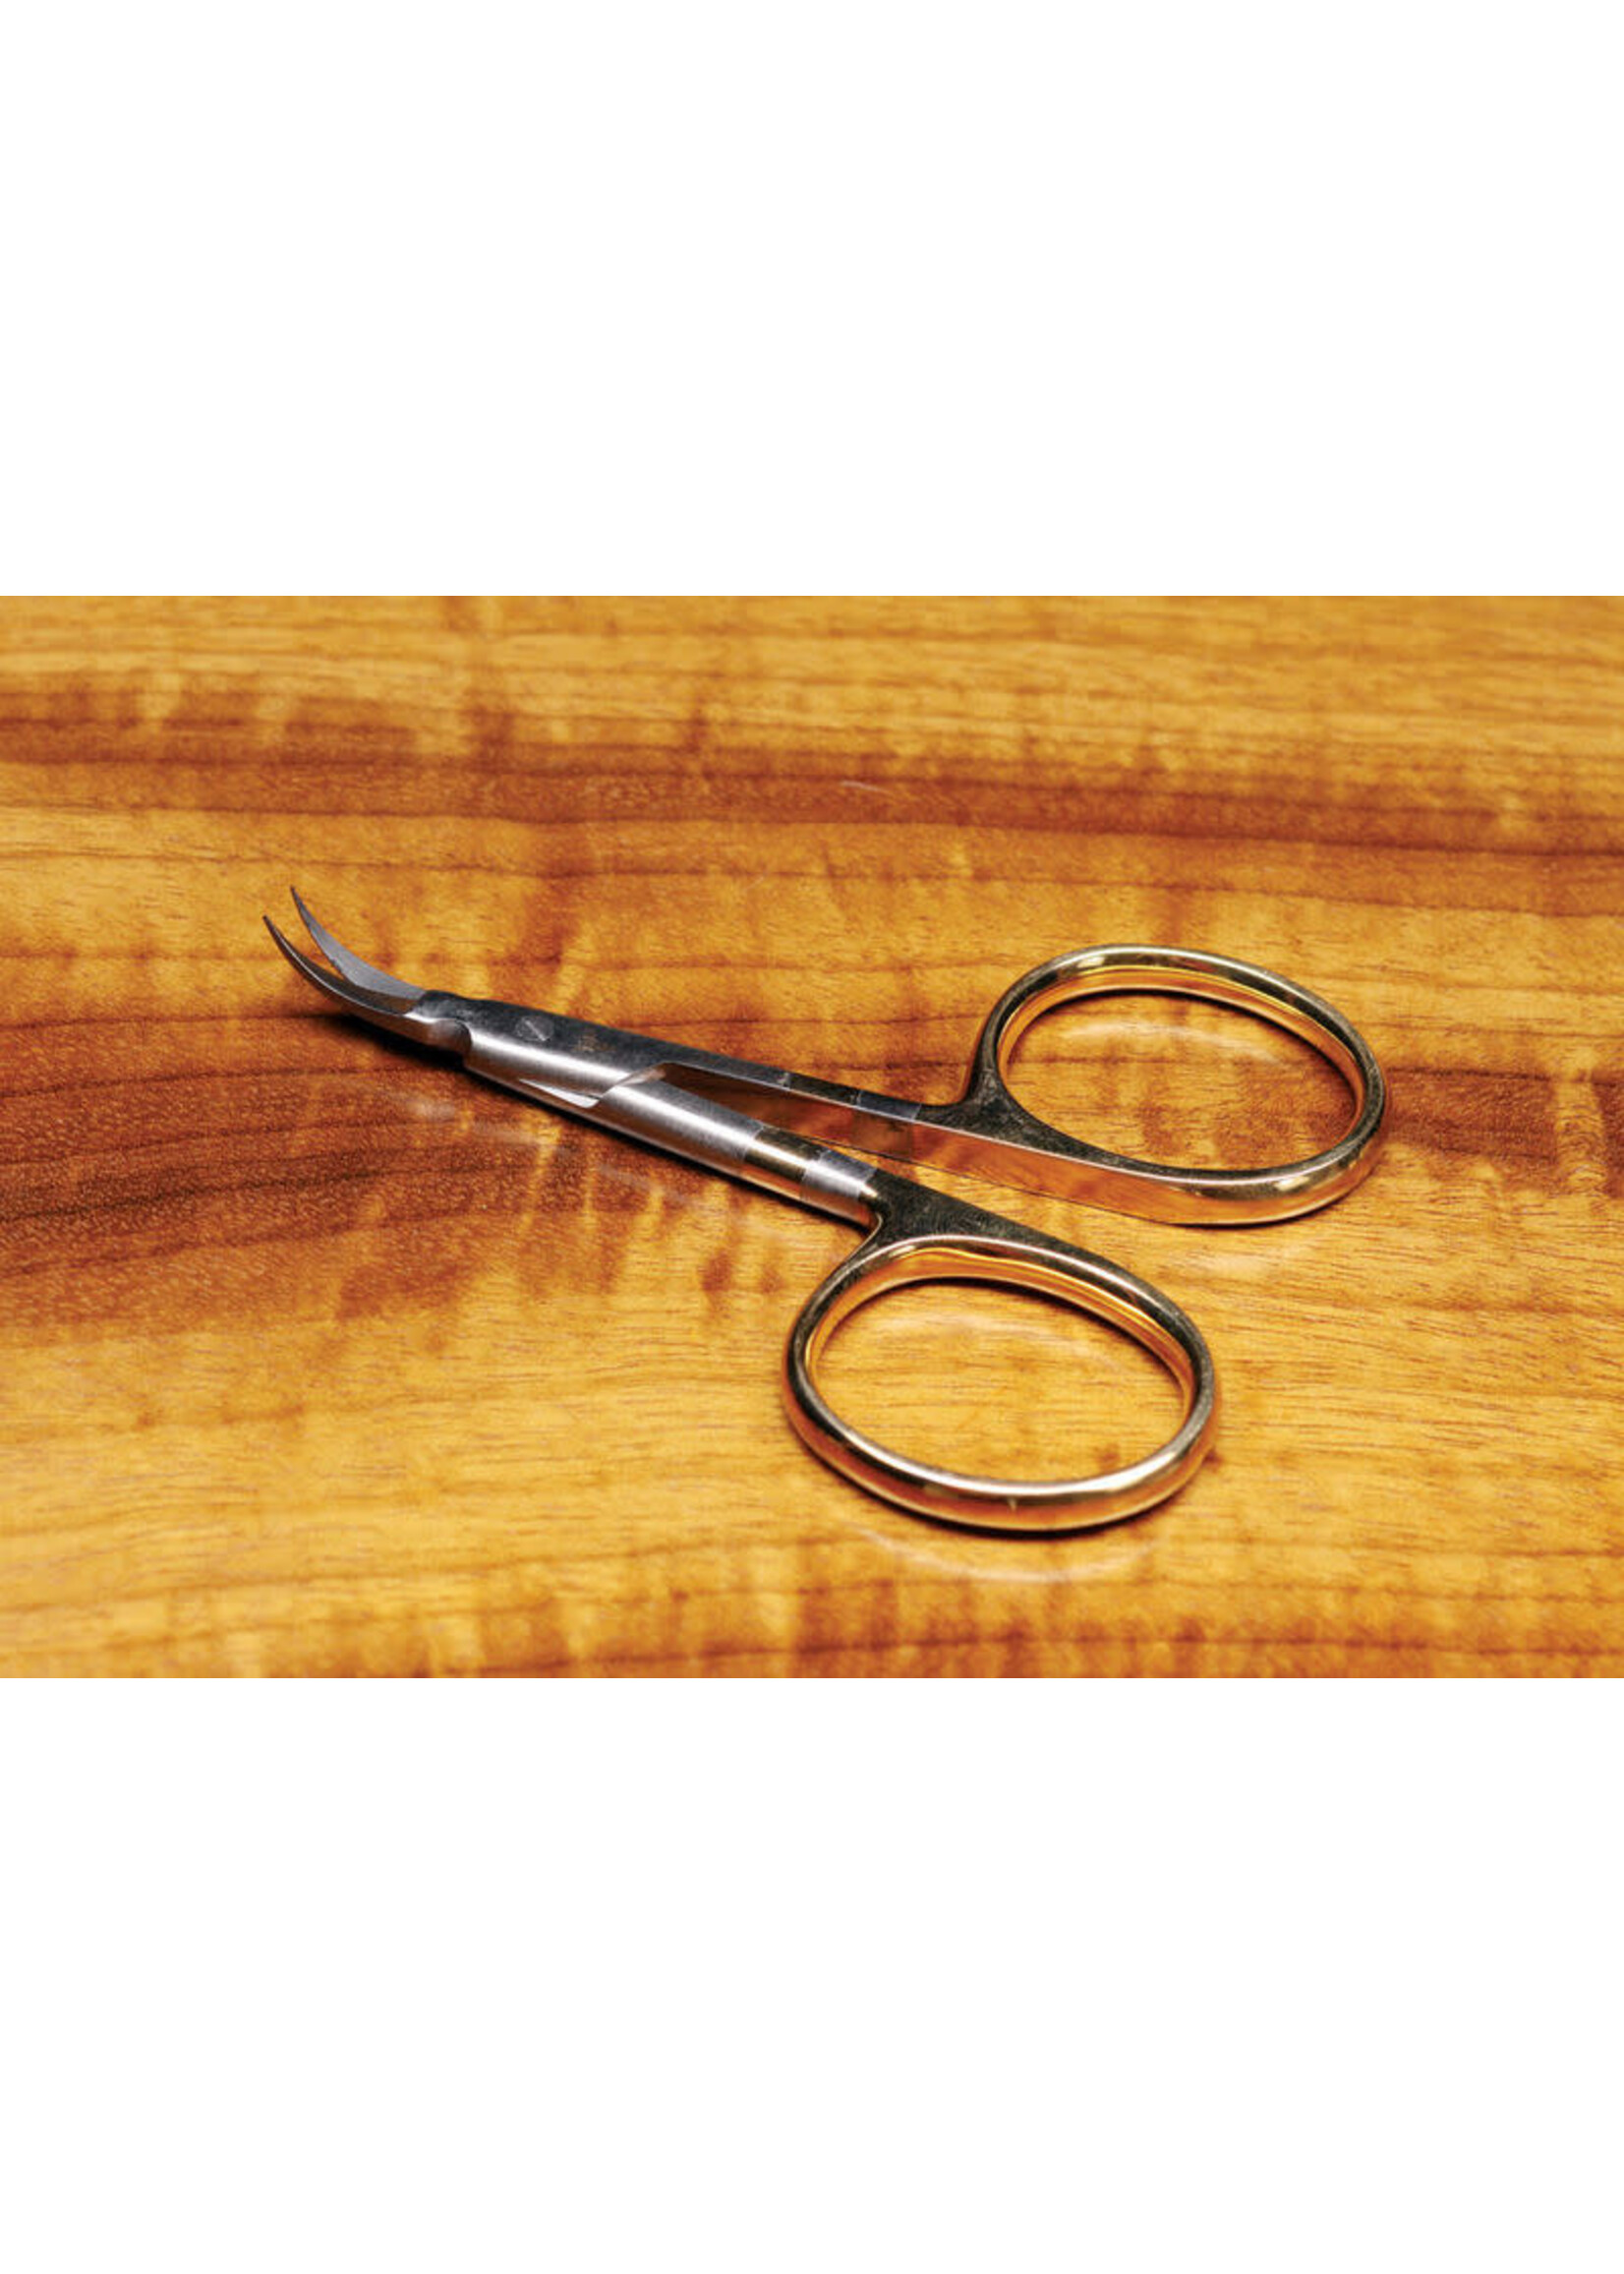 Dr. Slick Dr. Slick Arrow Scissor, 3-1/2", Gold Loops, Curved